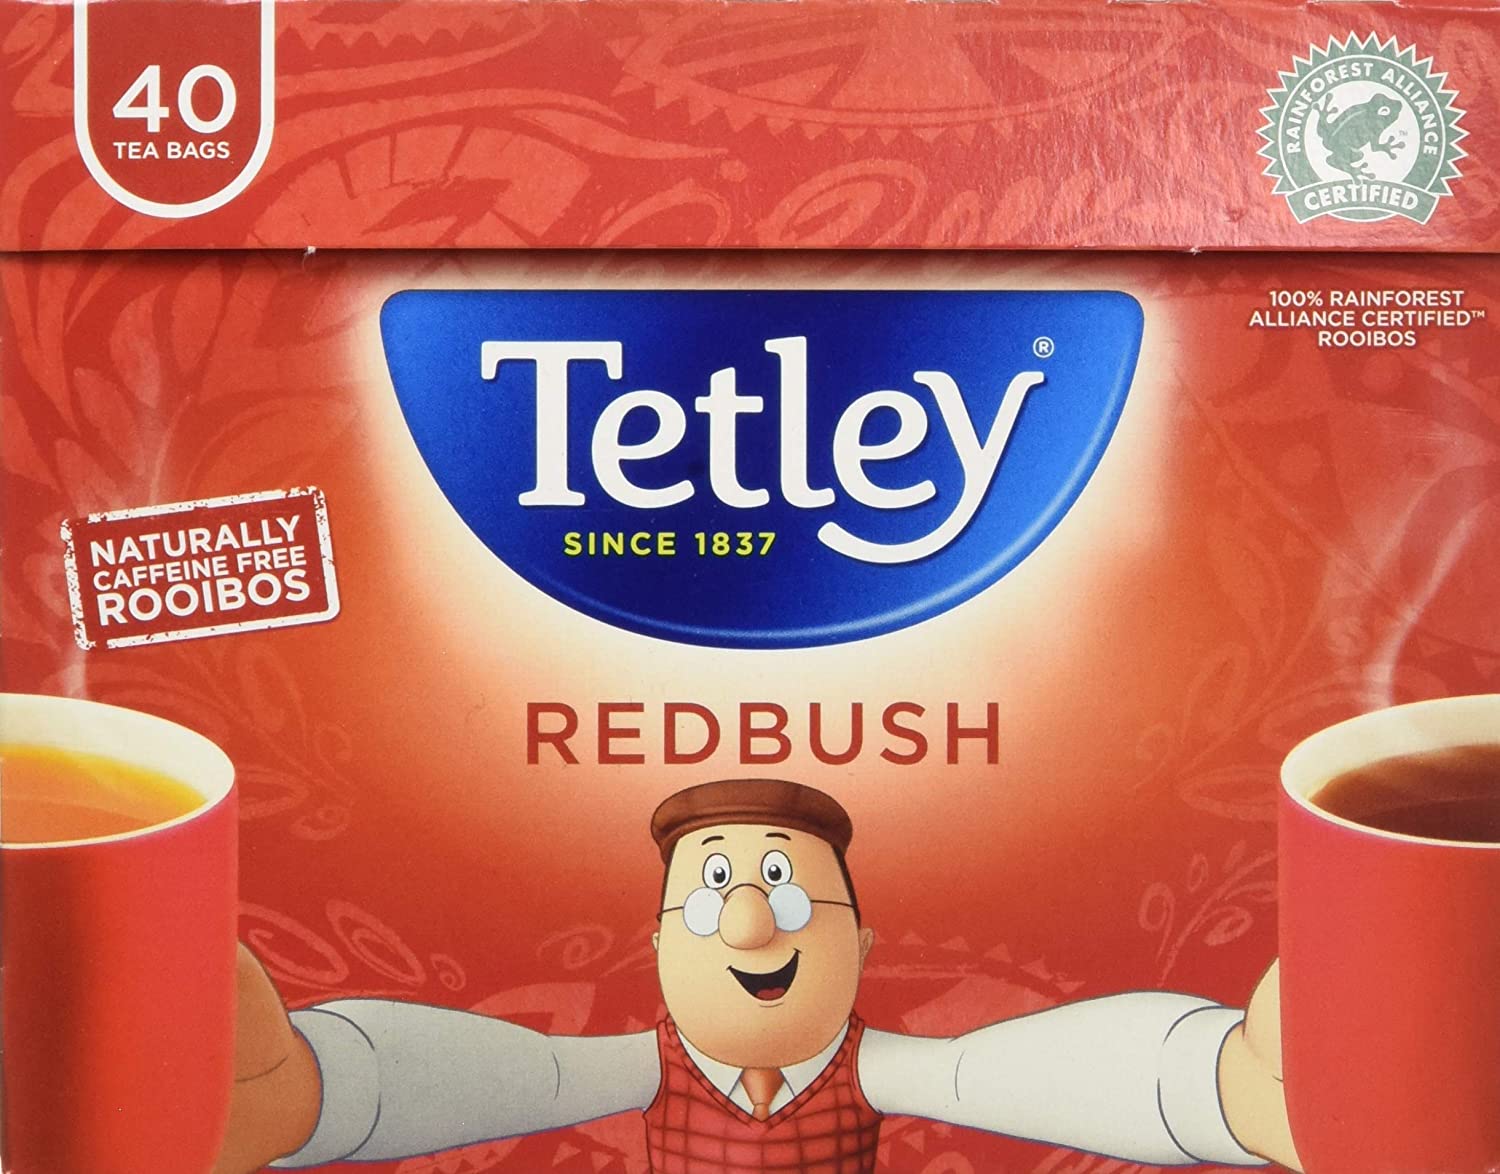 Tetley redbush